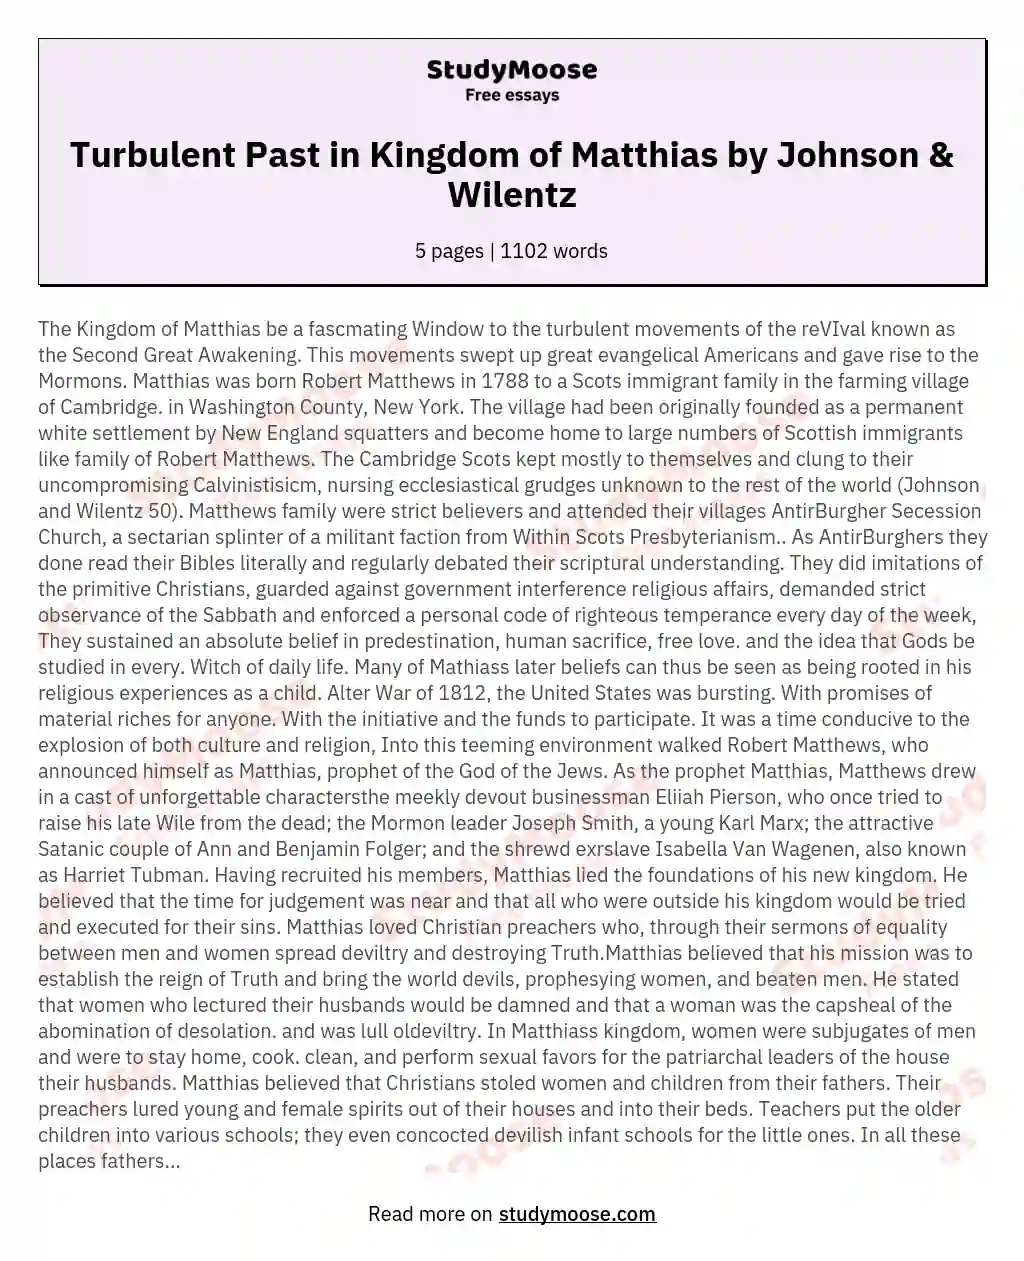 Turbulent Past in Kingdom of Matthias by Johnson & Wilentz essay